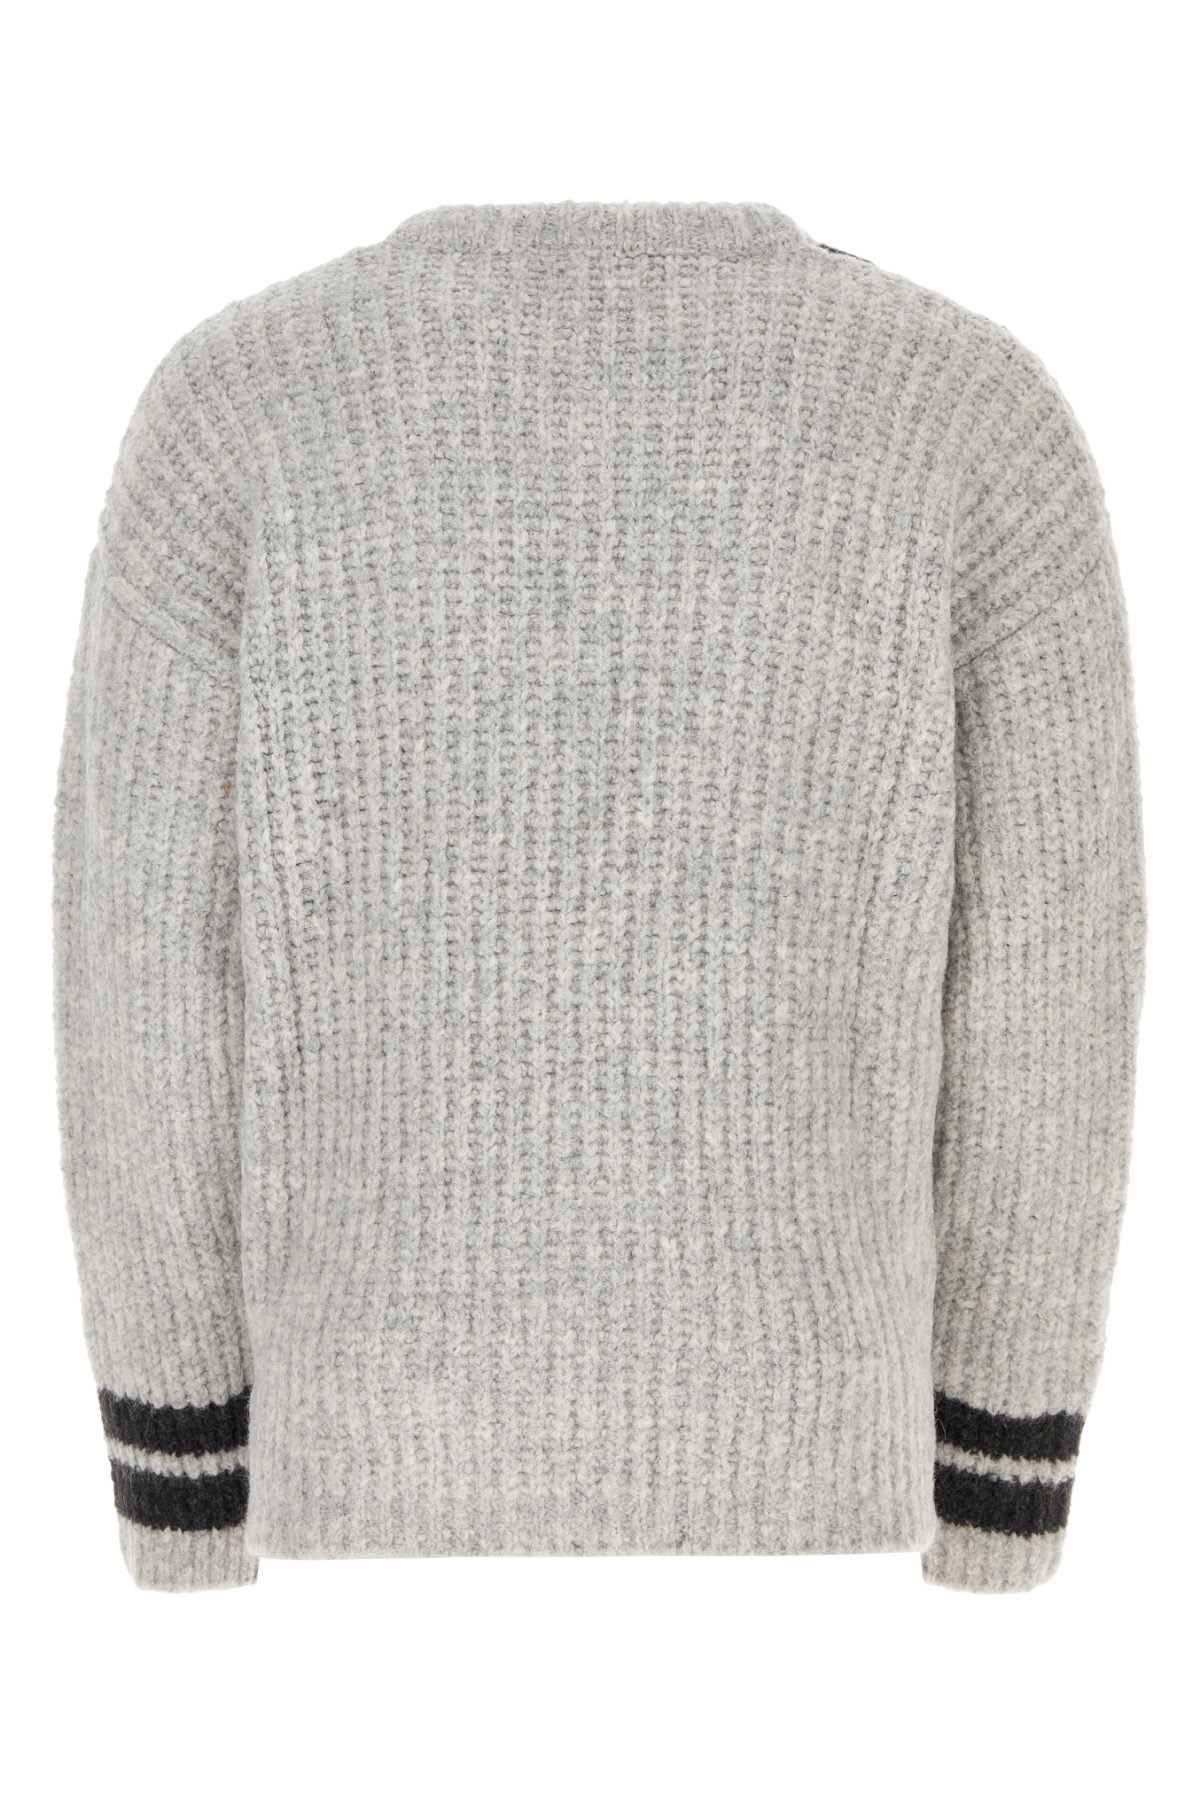 Erl Light Grey Knit Sweater